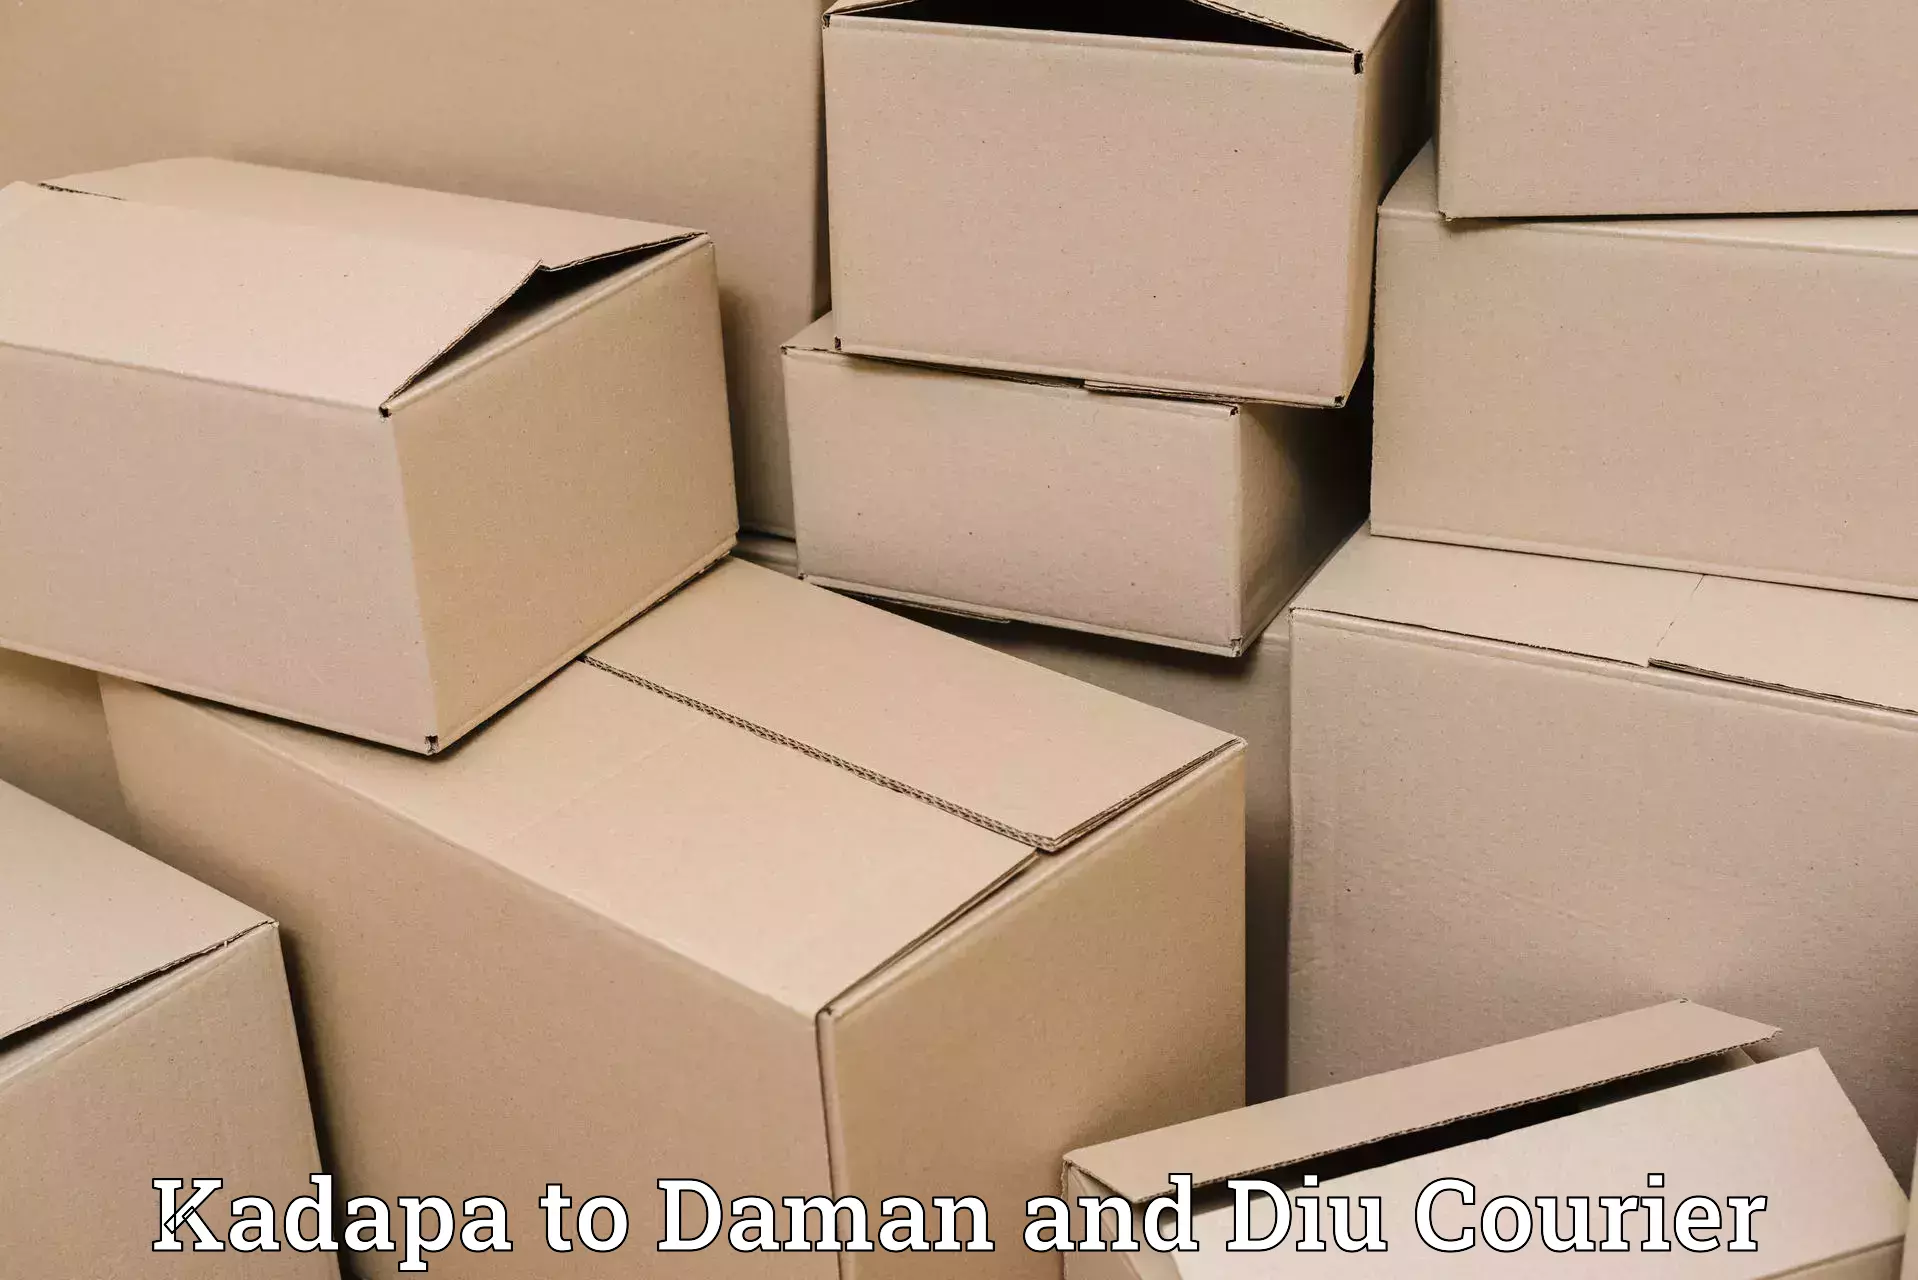 High-capacity parcel service Kadapa to Daman